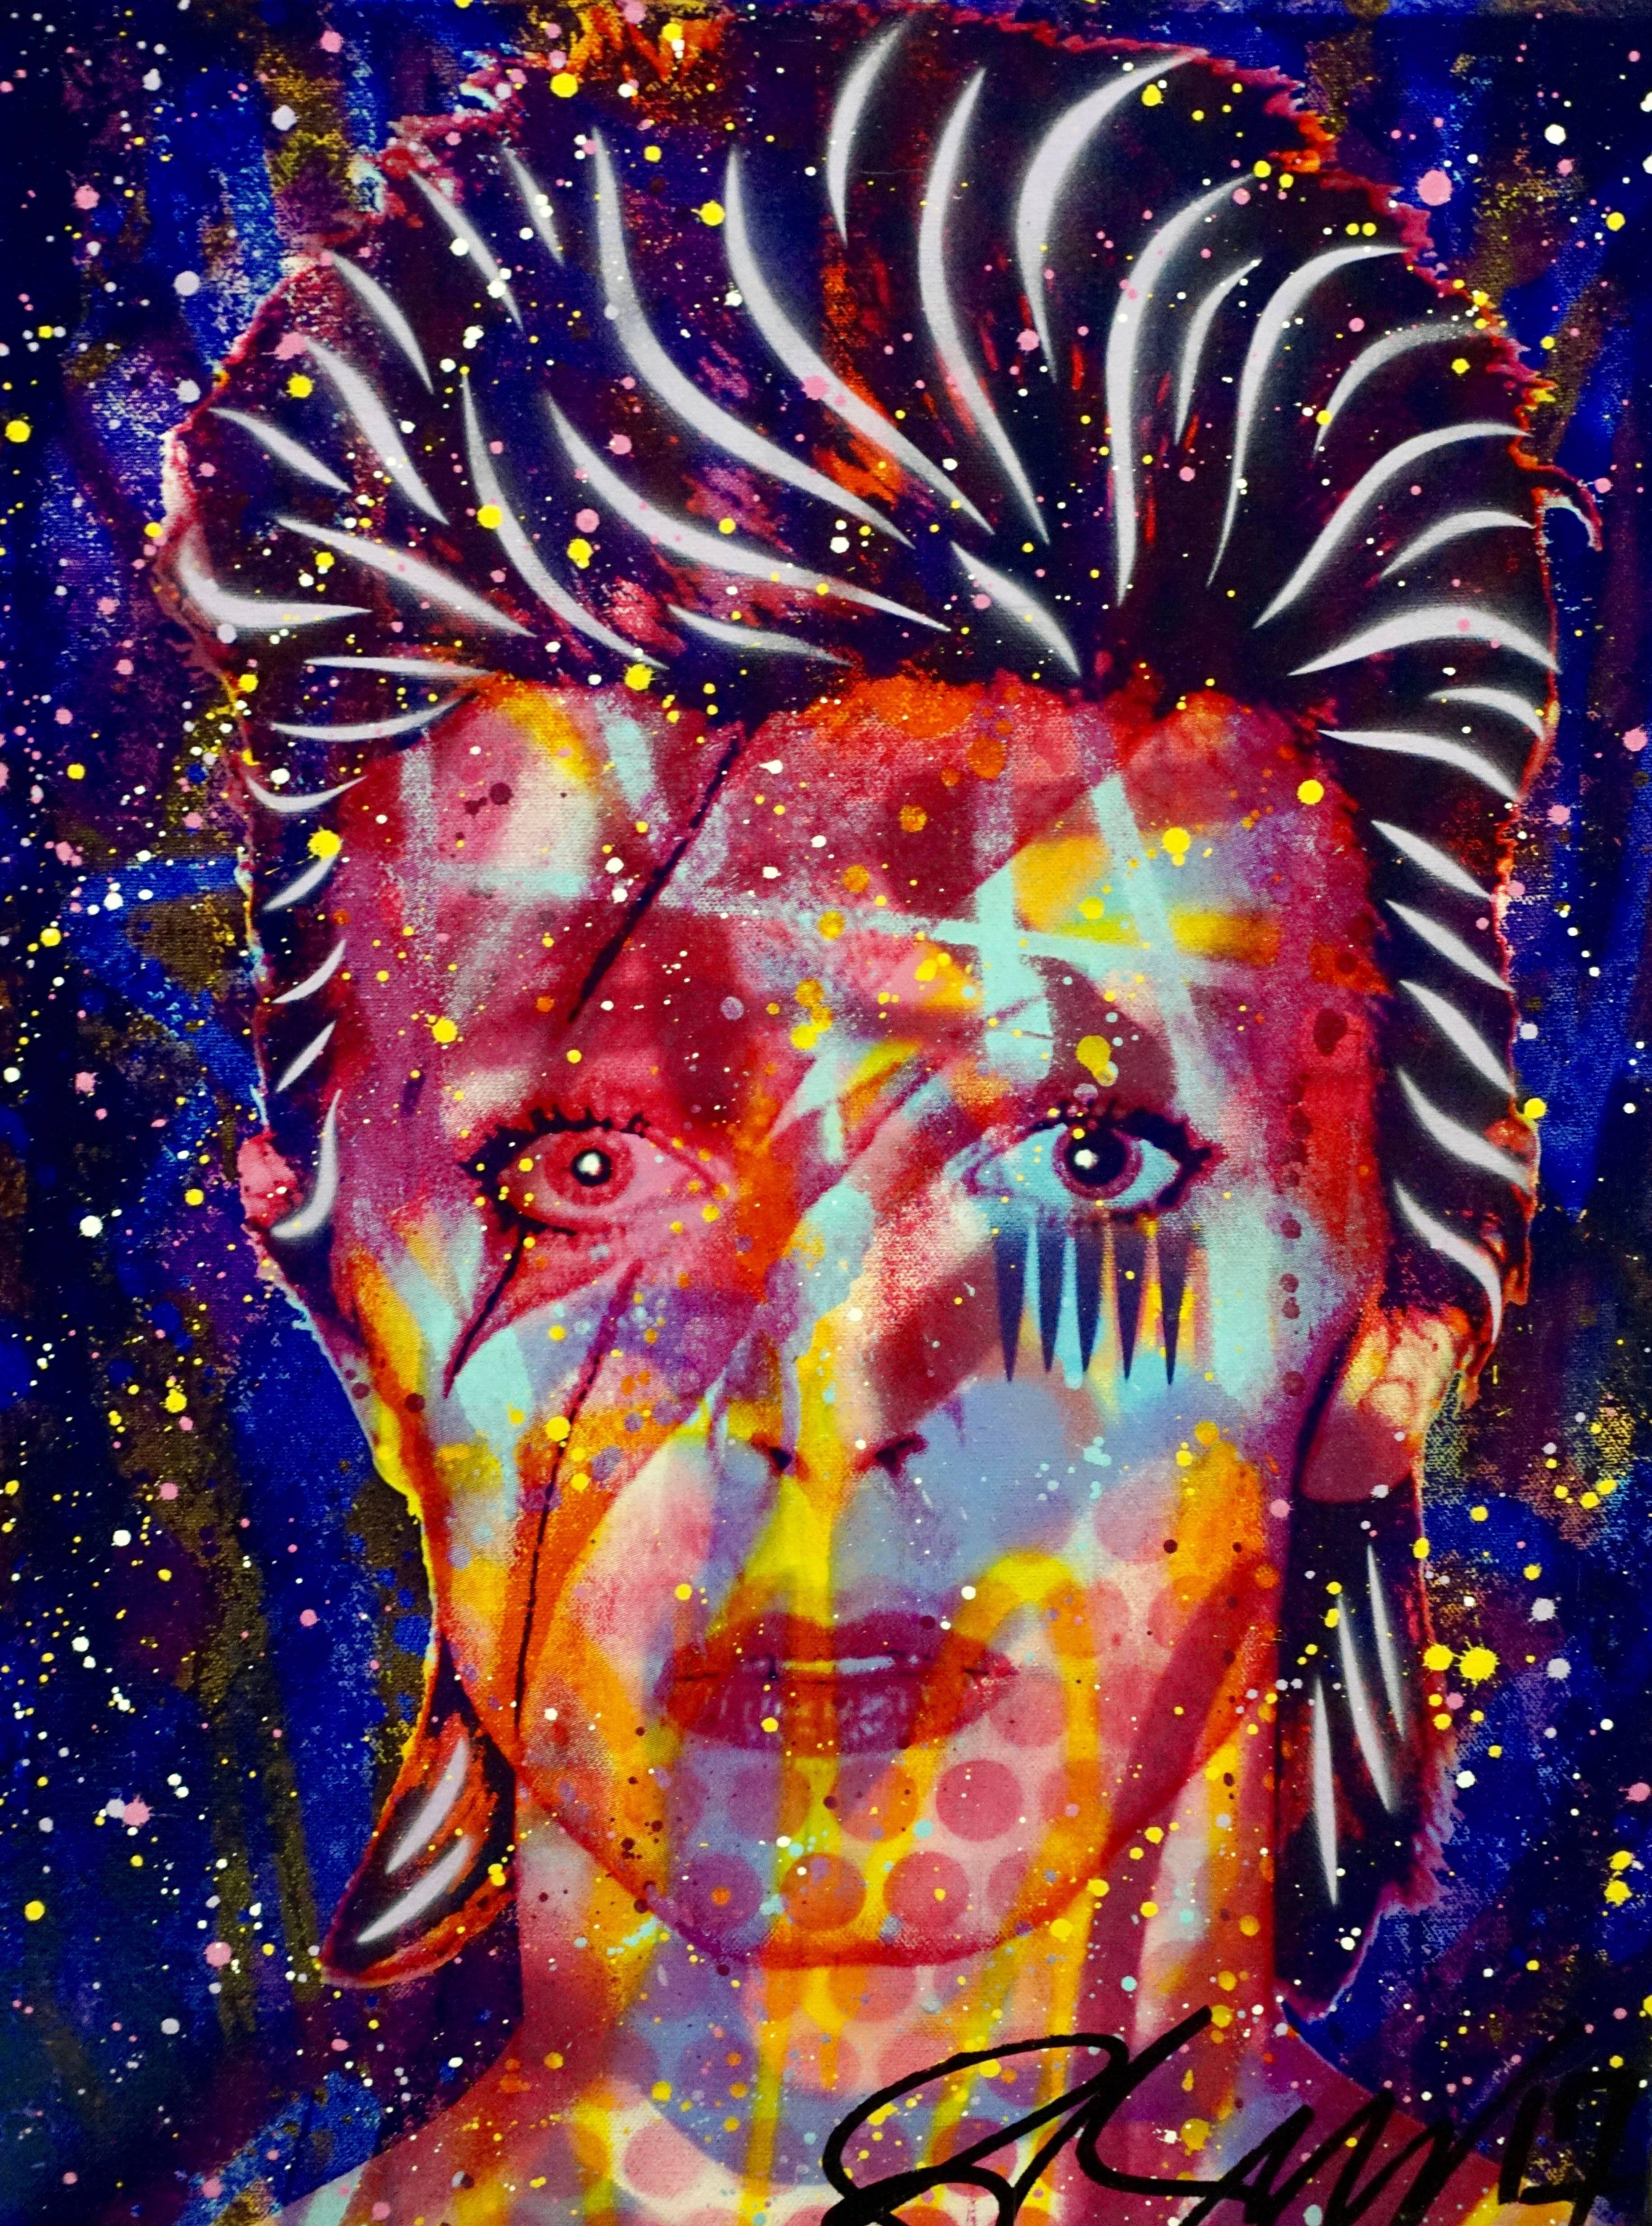 David Bowie Jagged Tears 1